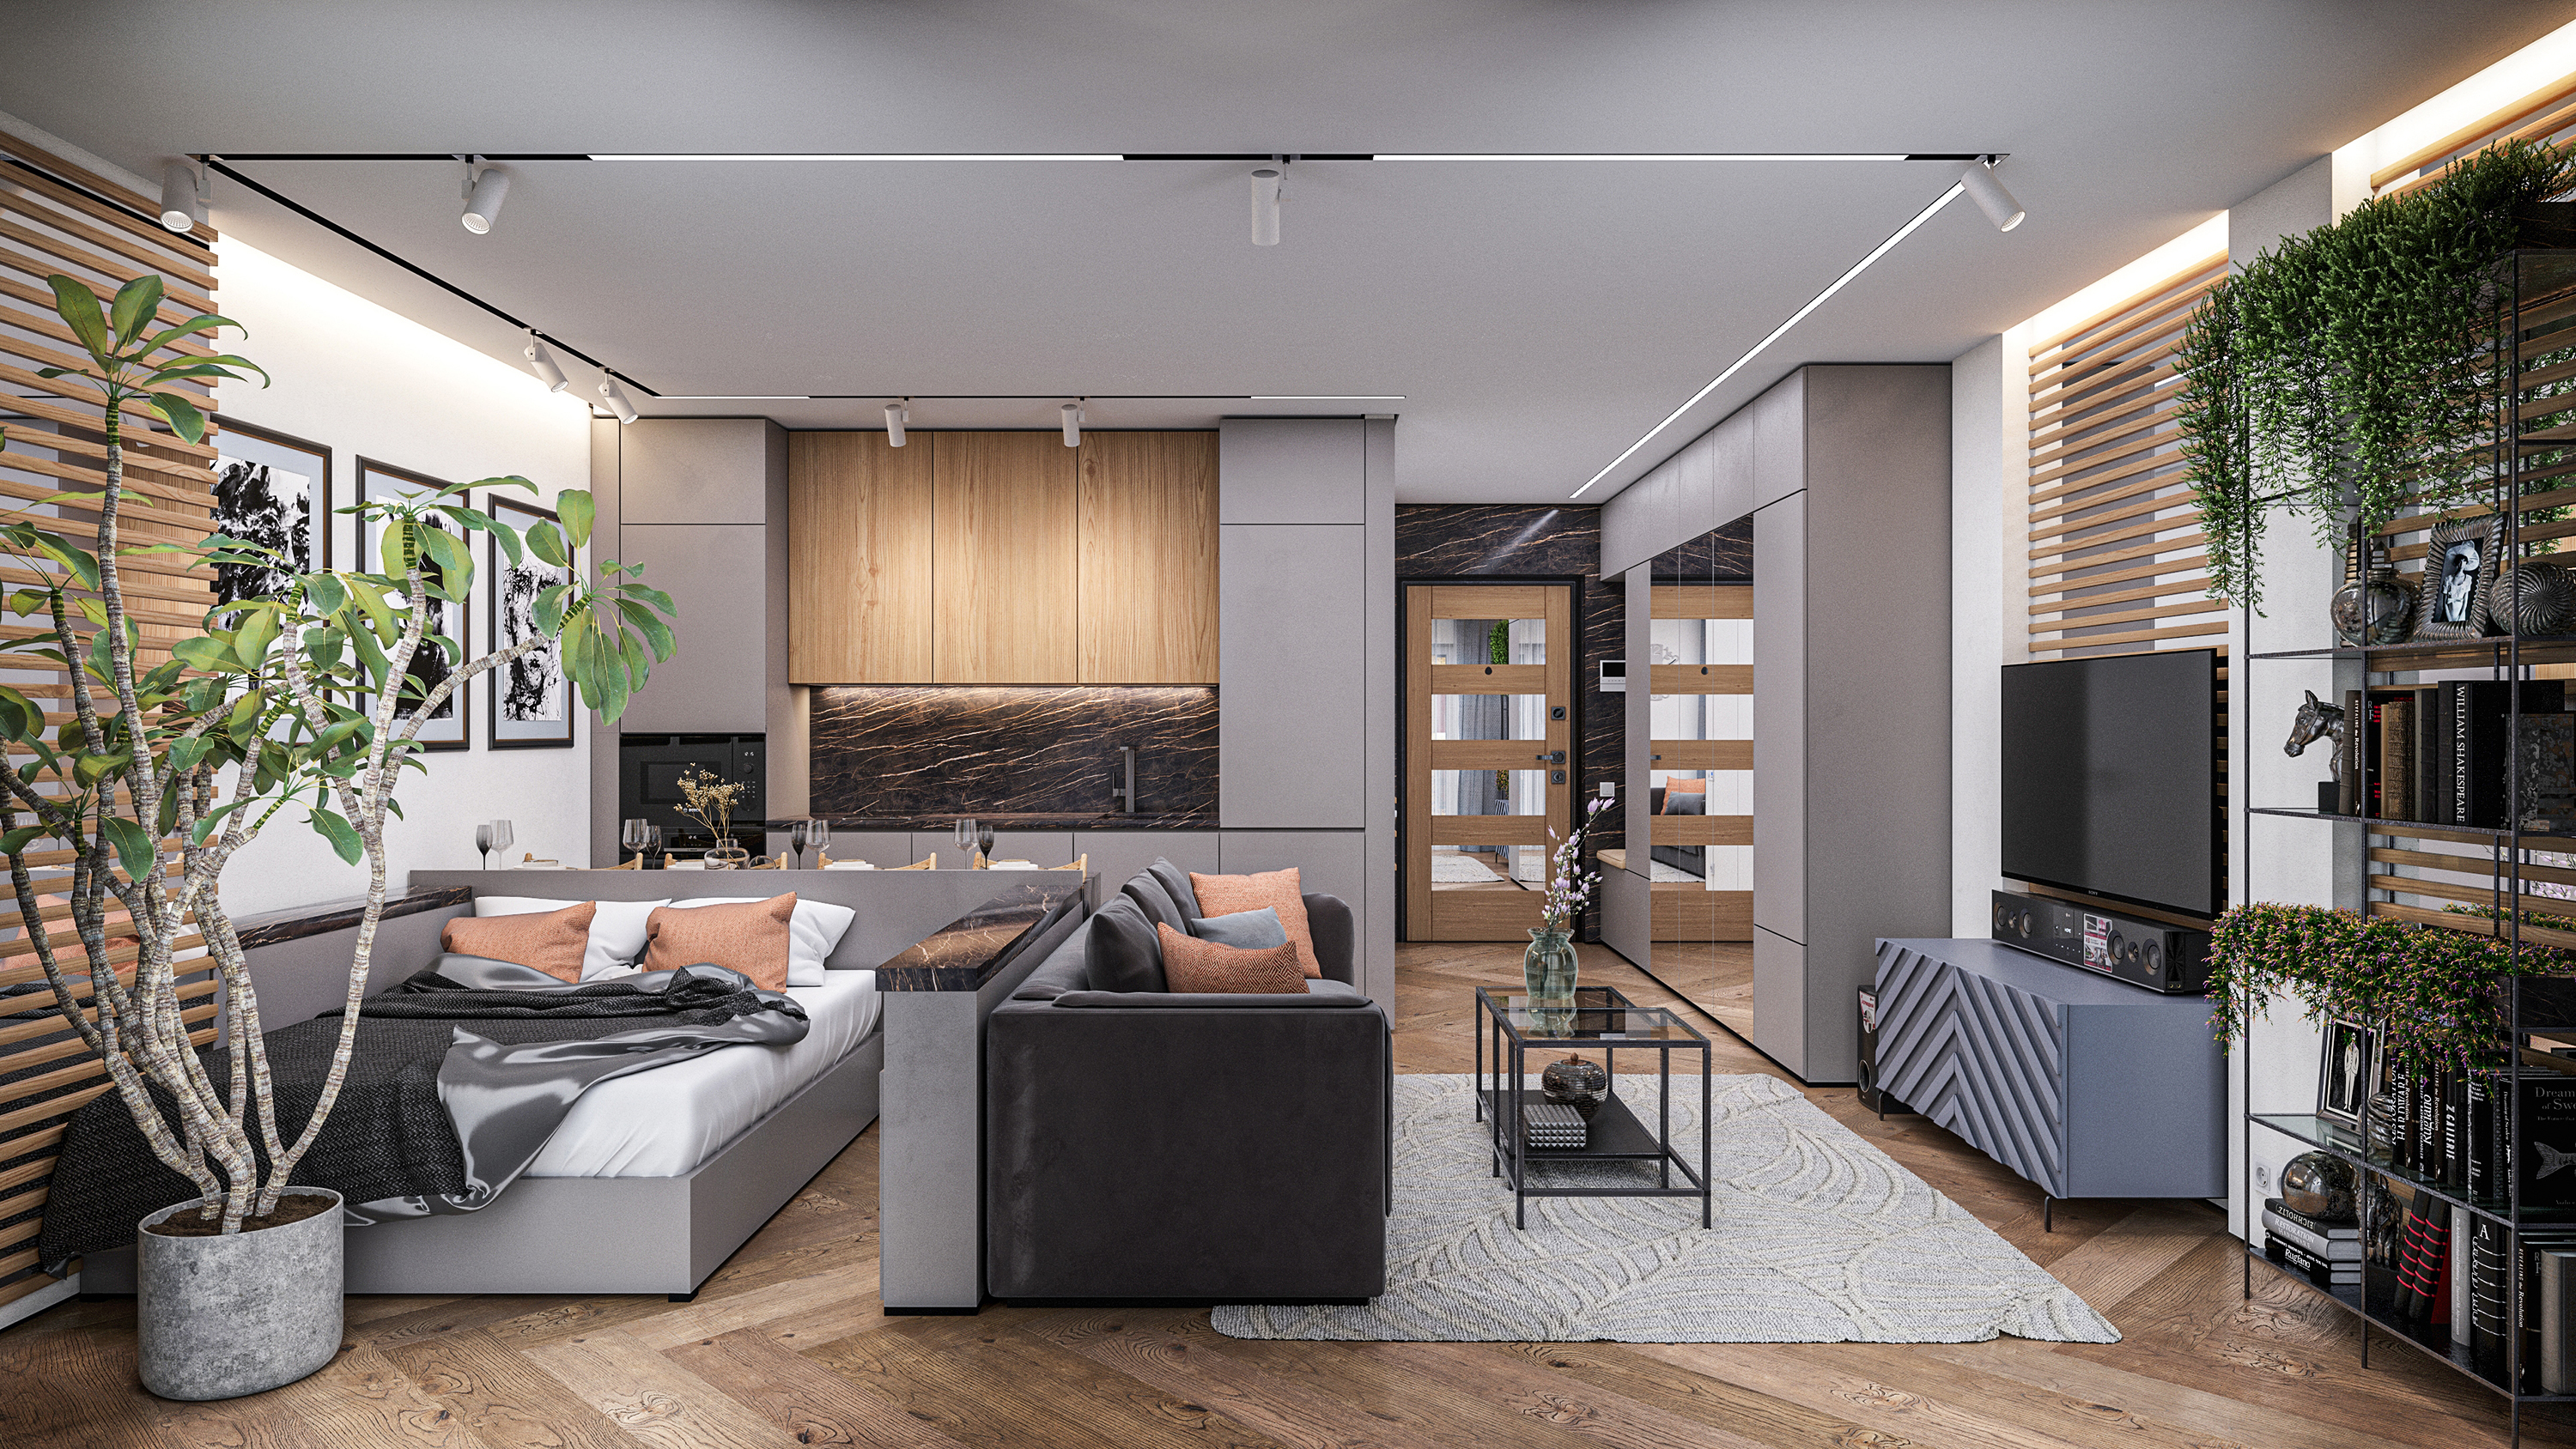 Residential complex "Skandi". INTERIORS. in 3d max Corona render 8 image